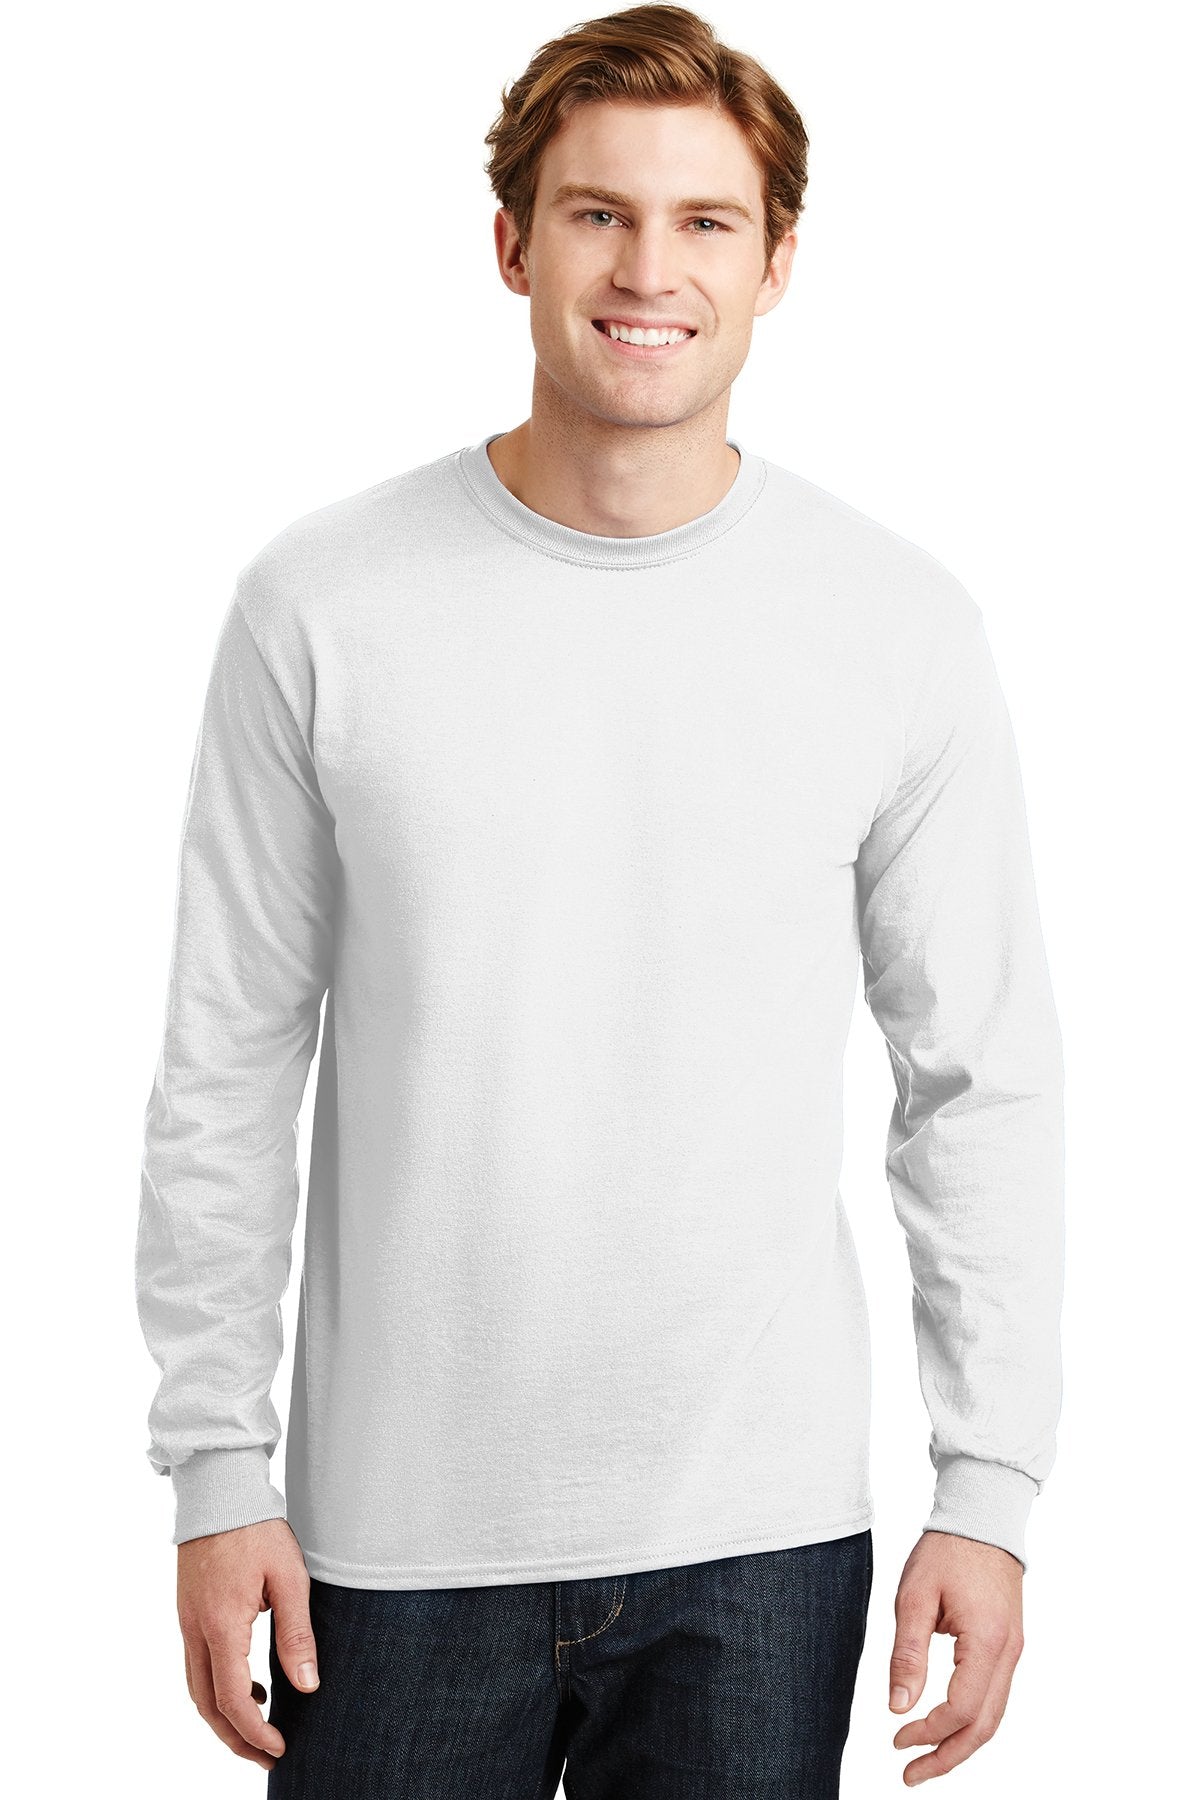 gildan dryblend cotton poly long sleeve t shirt 8400 white